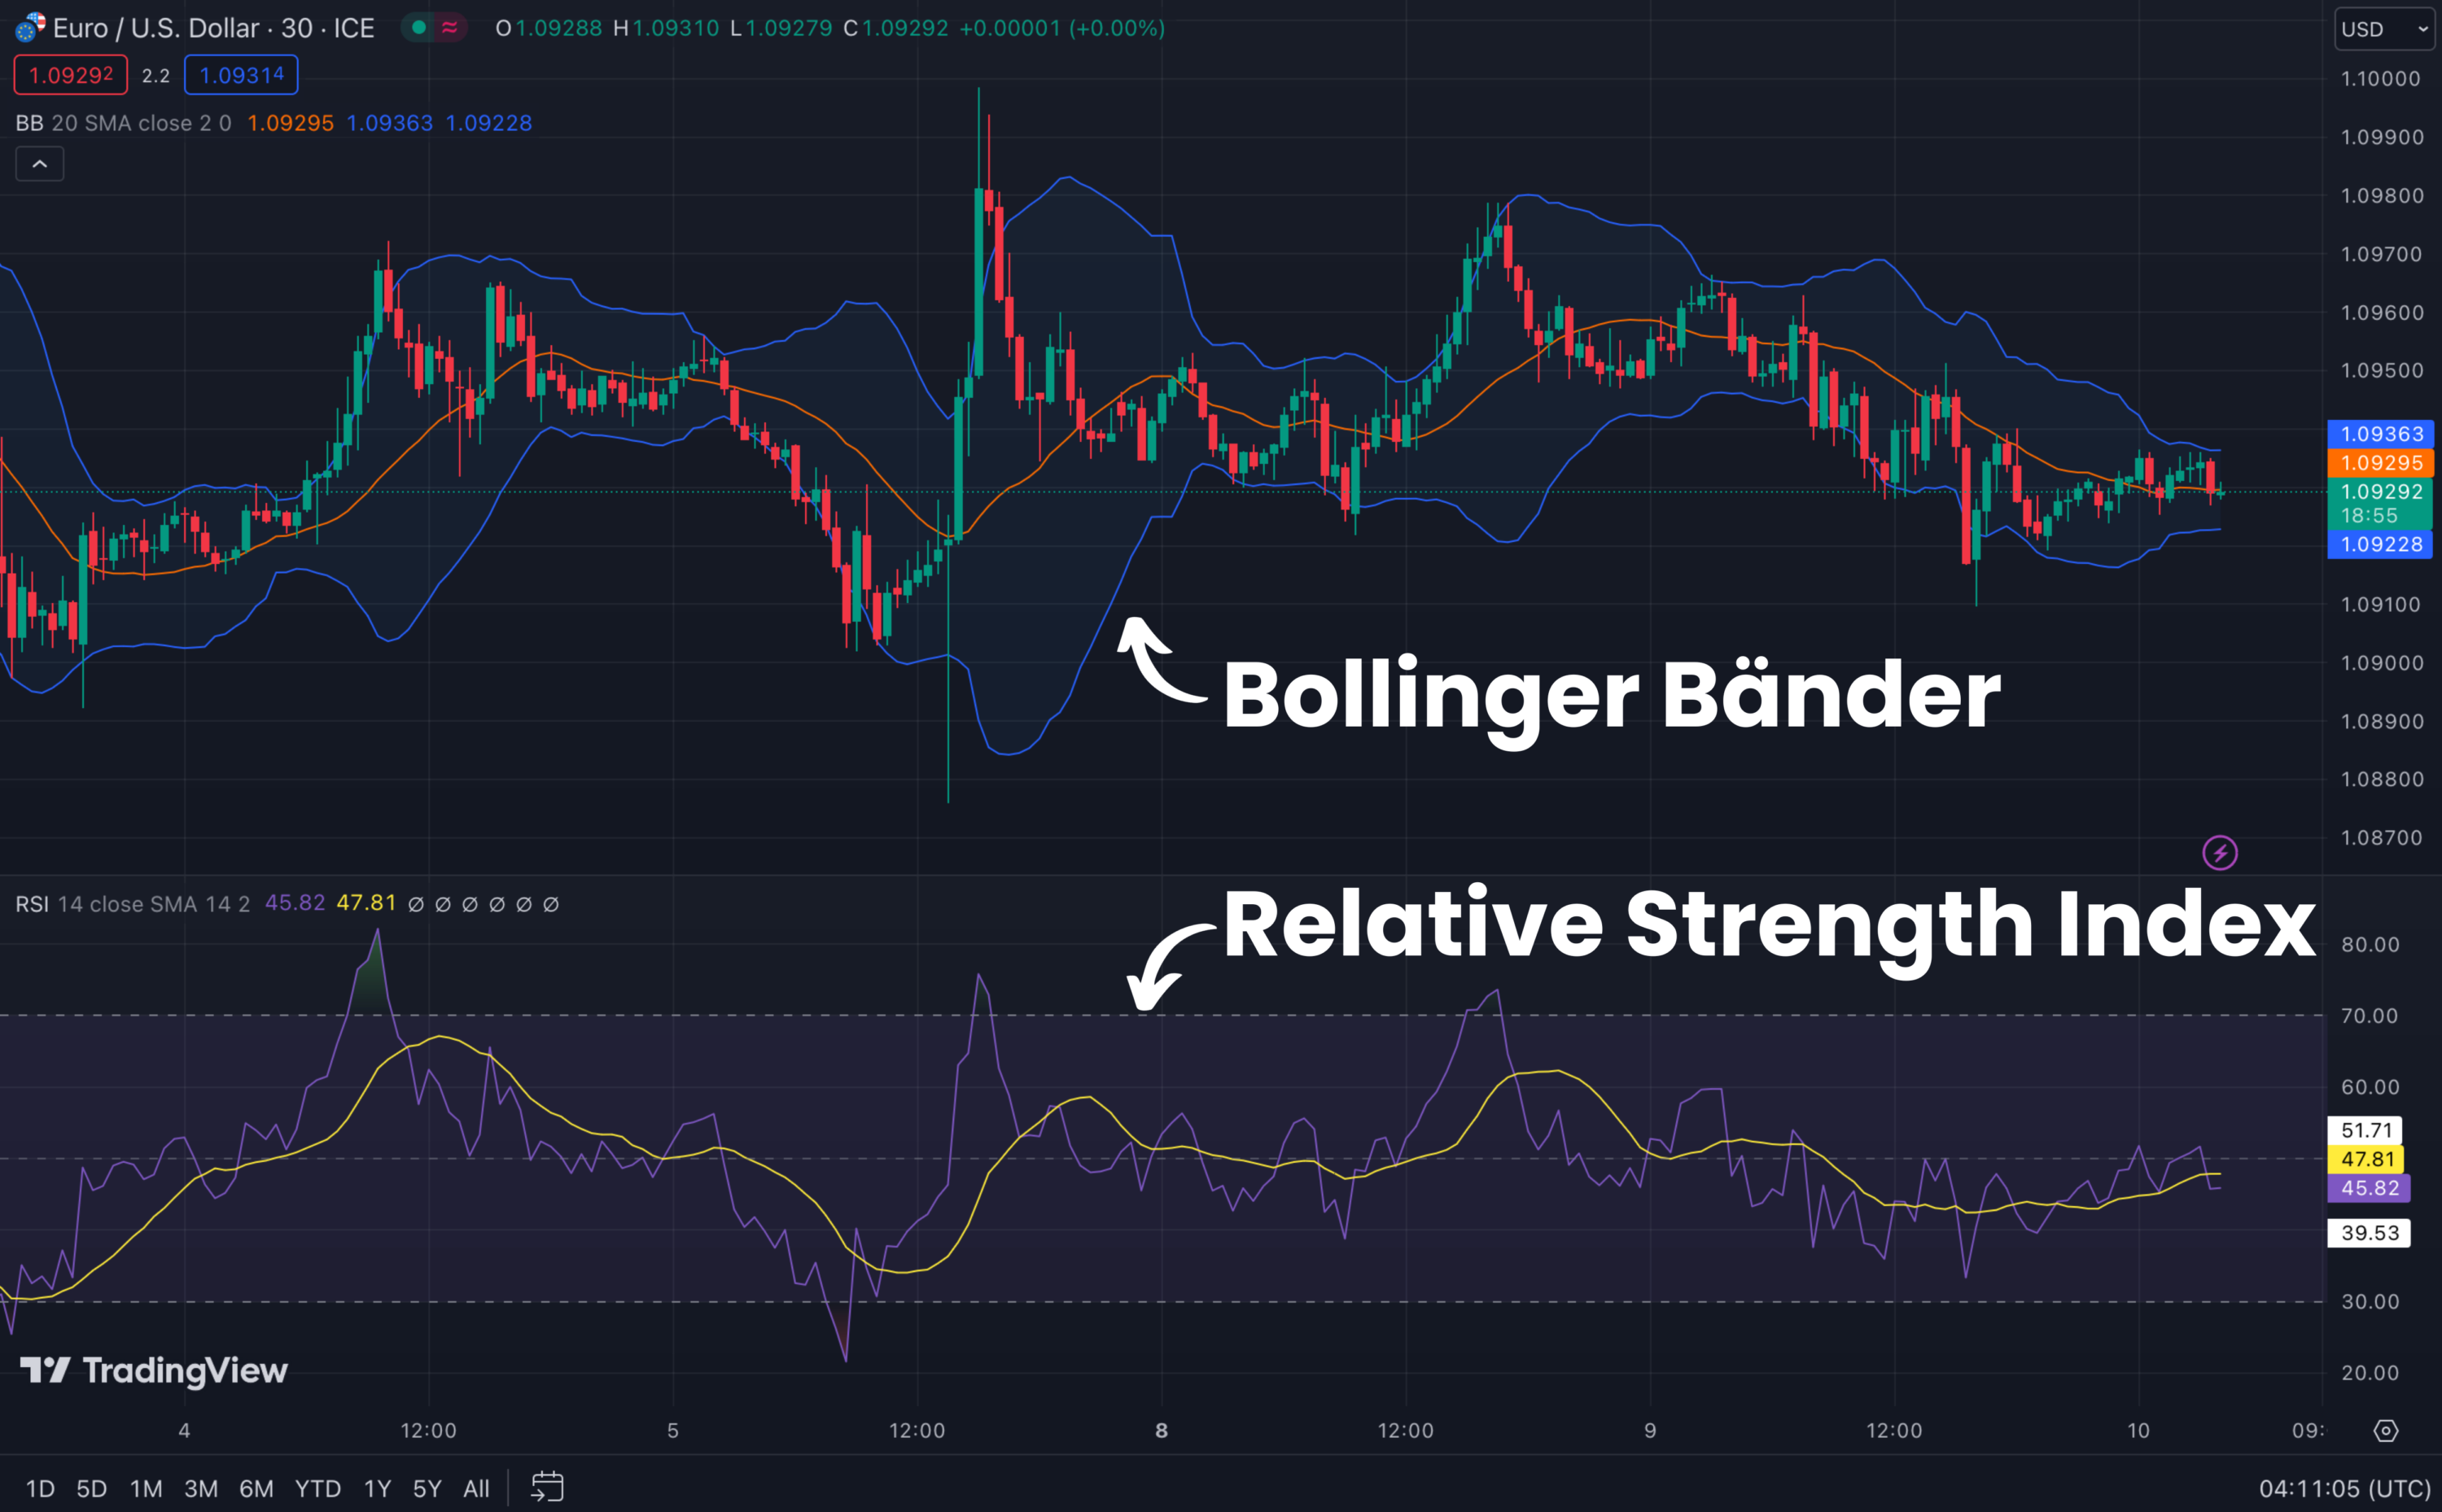 Bollinger Bänder und Relative Strength Index im EURO/USD Chart von tradingview.com